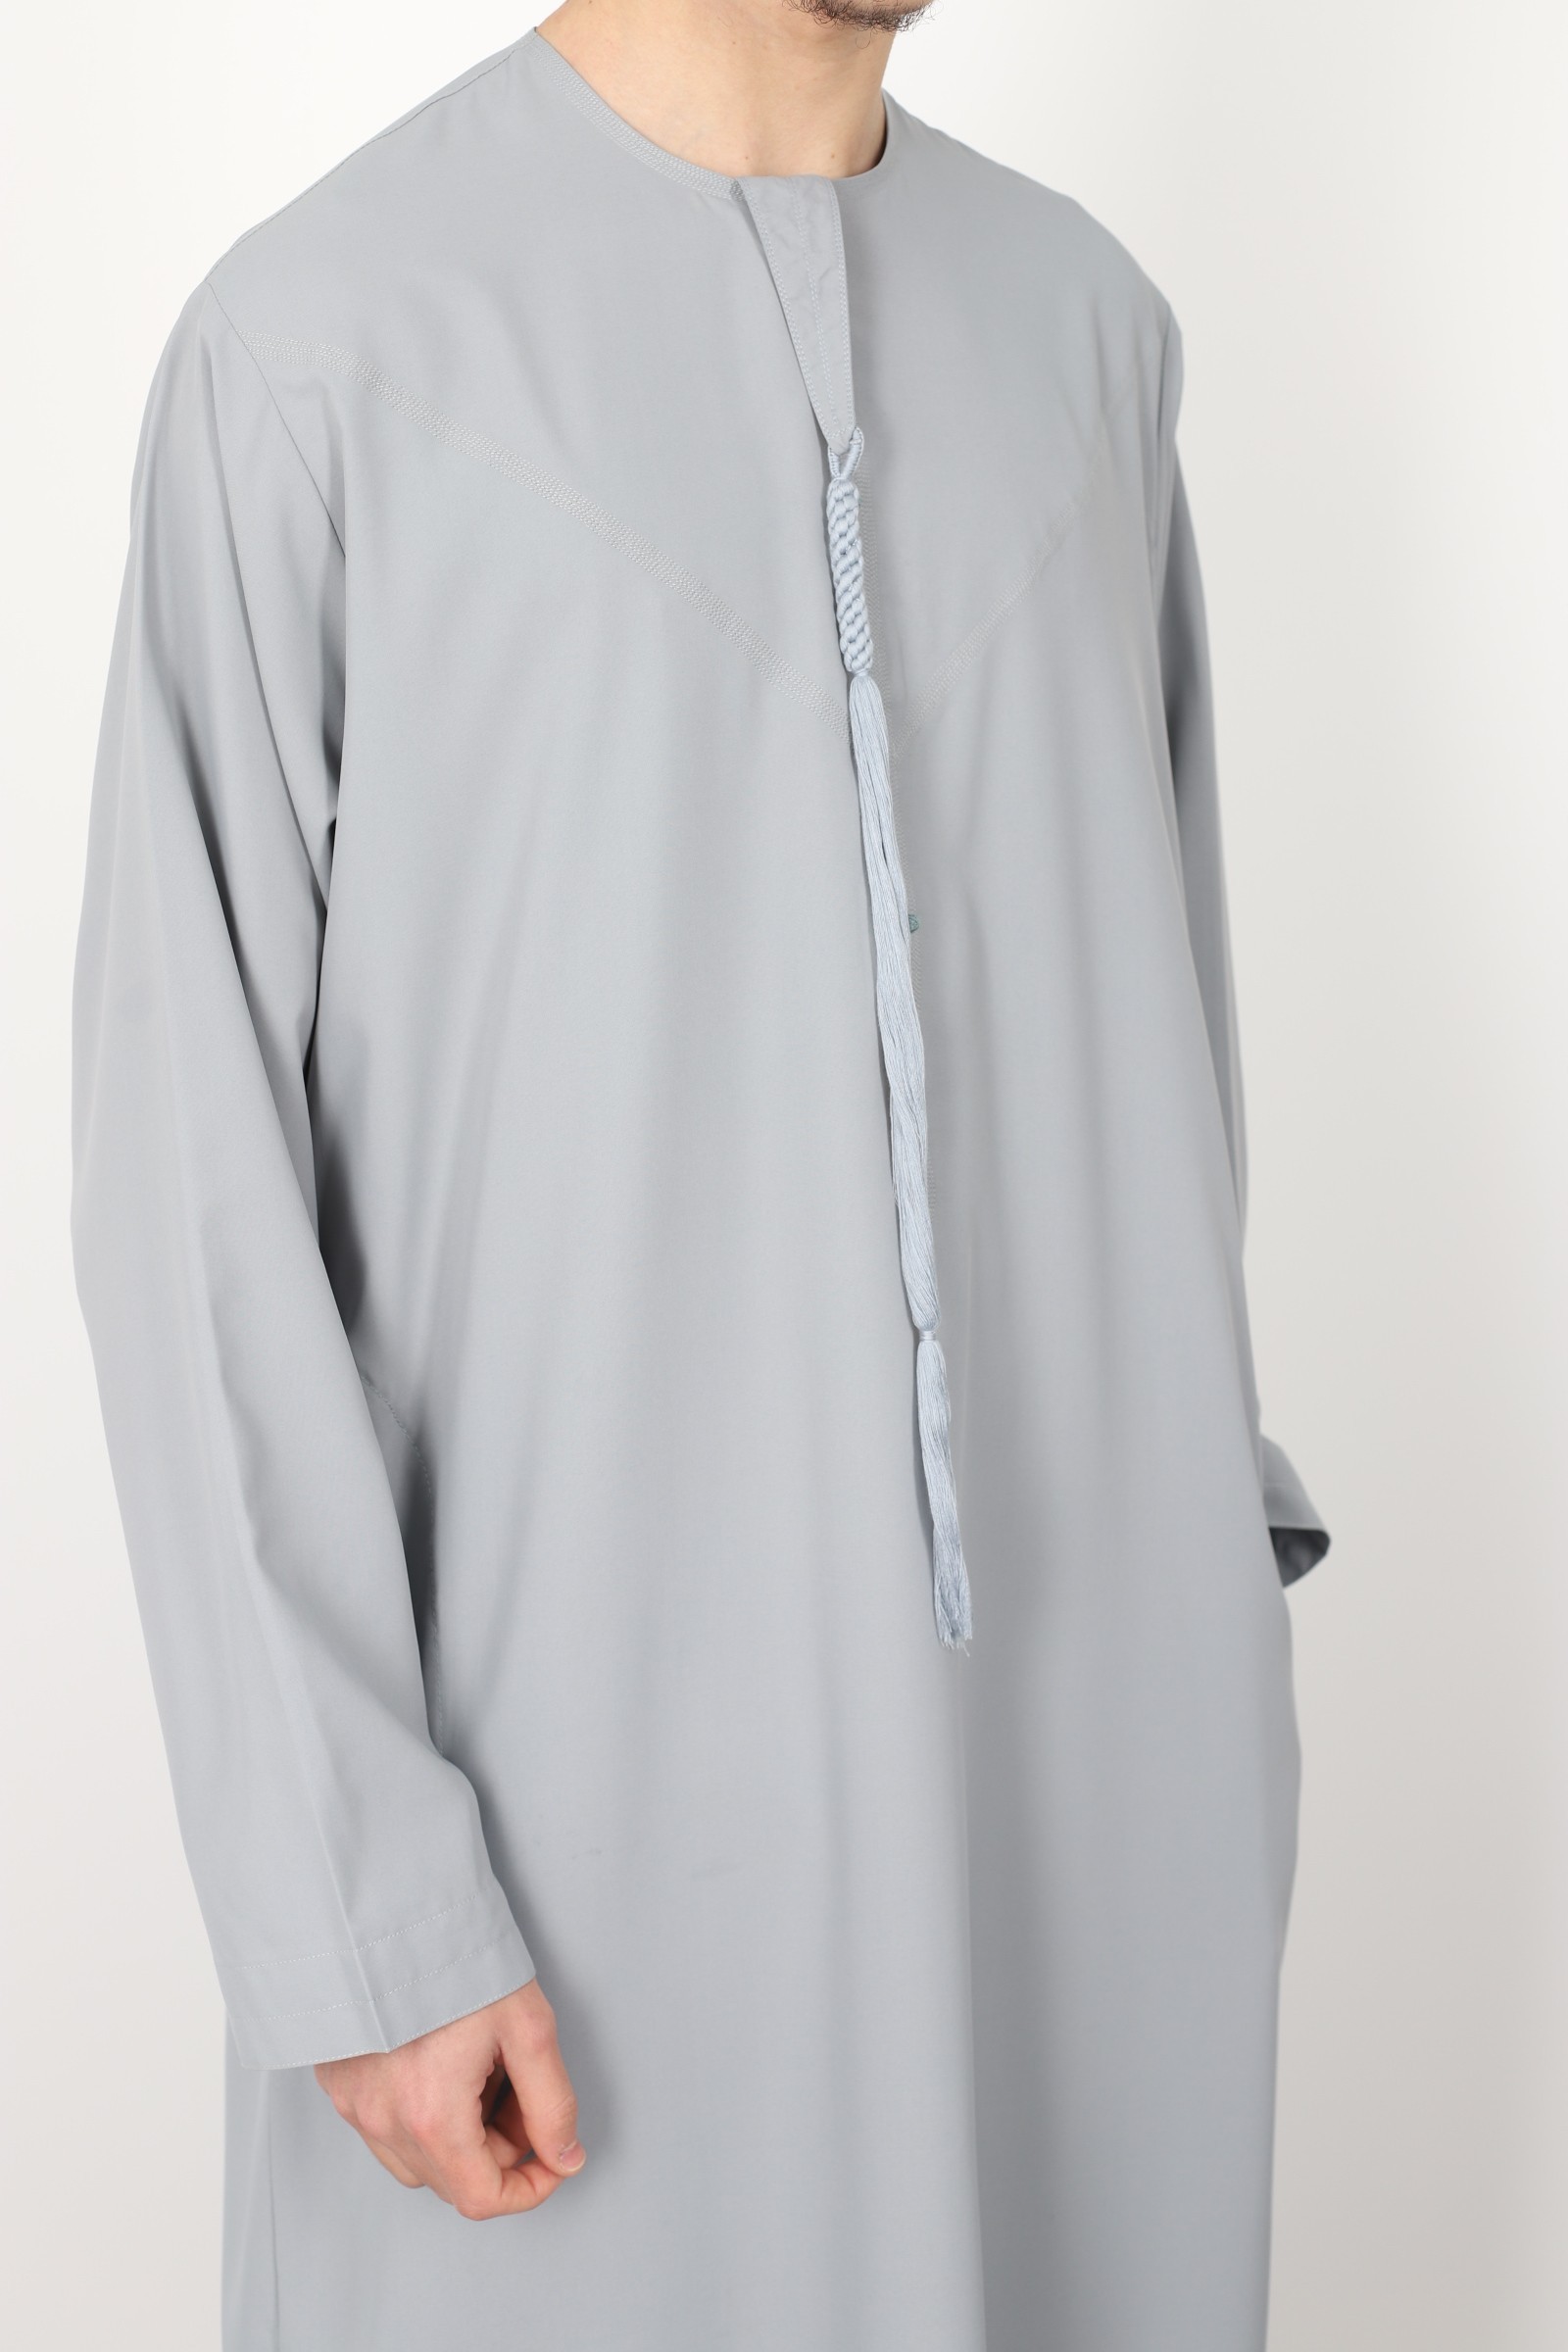 Thobe deluxe emirati light gray qamis new design